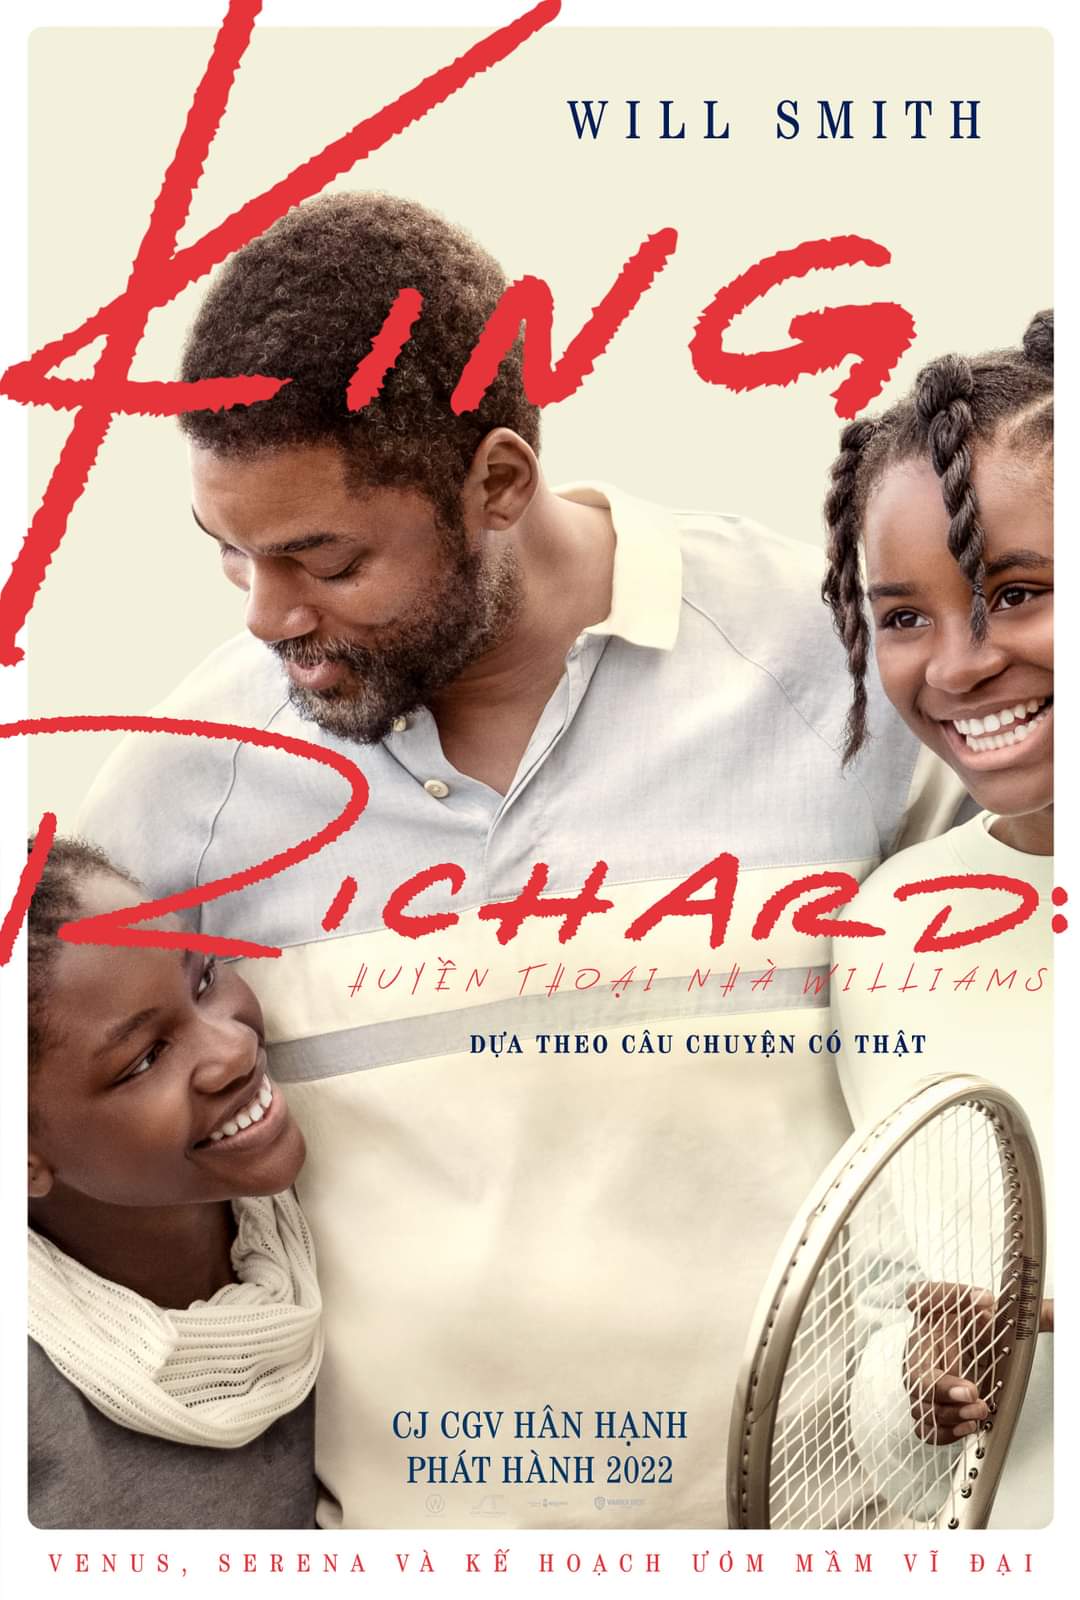 King Richard inspirational movies